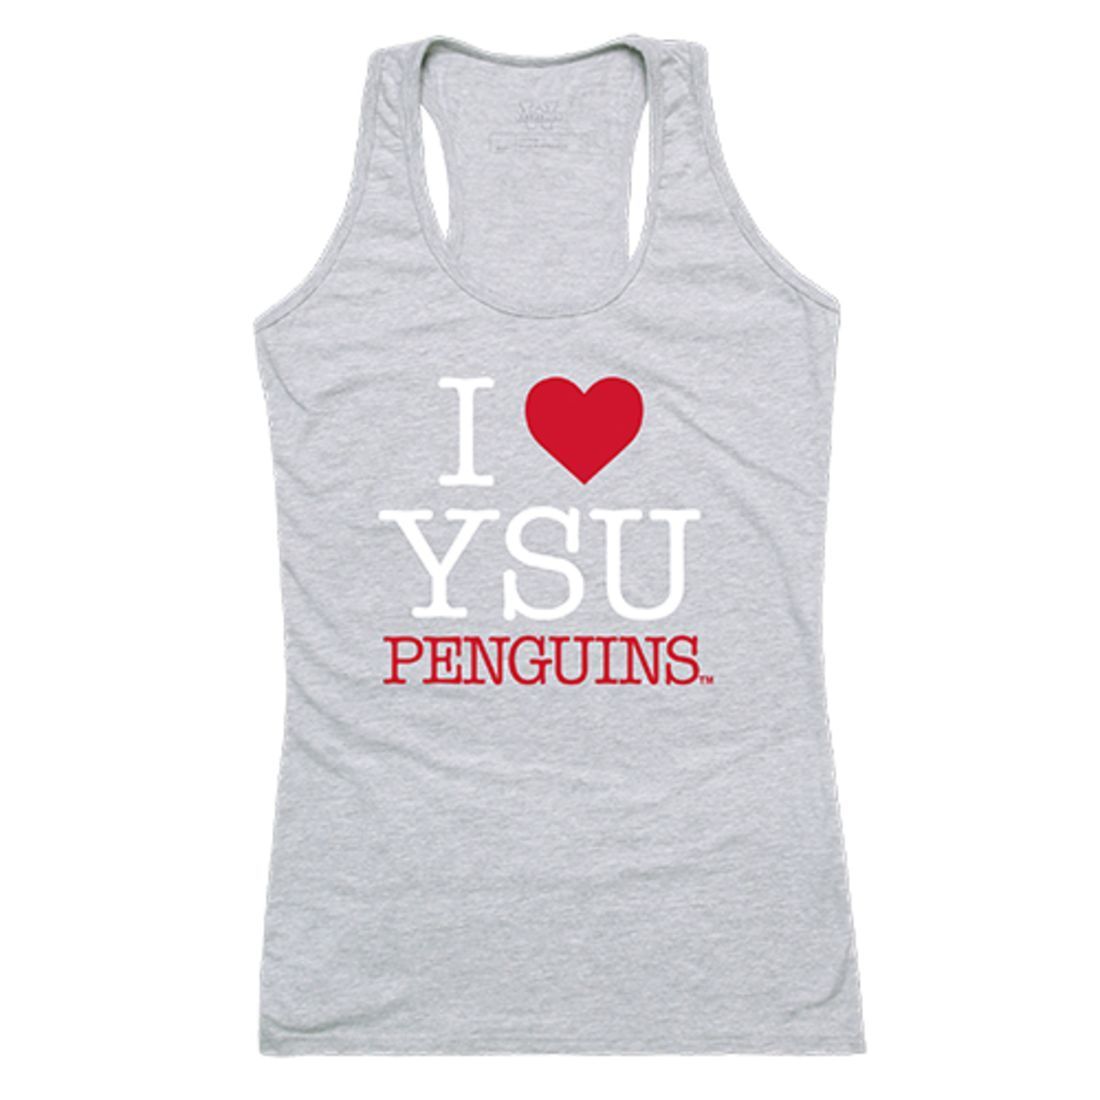 YSU Youngstown State University Penguins Womens Love Tank Top Tee T-Shirt Heather Grey-Campus-Wardrobe